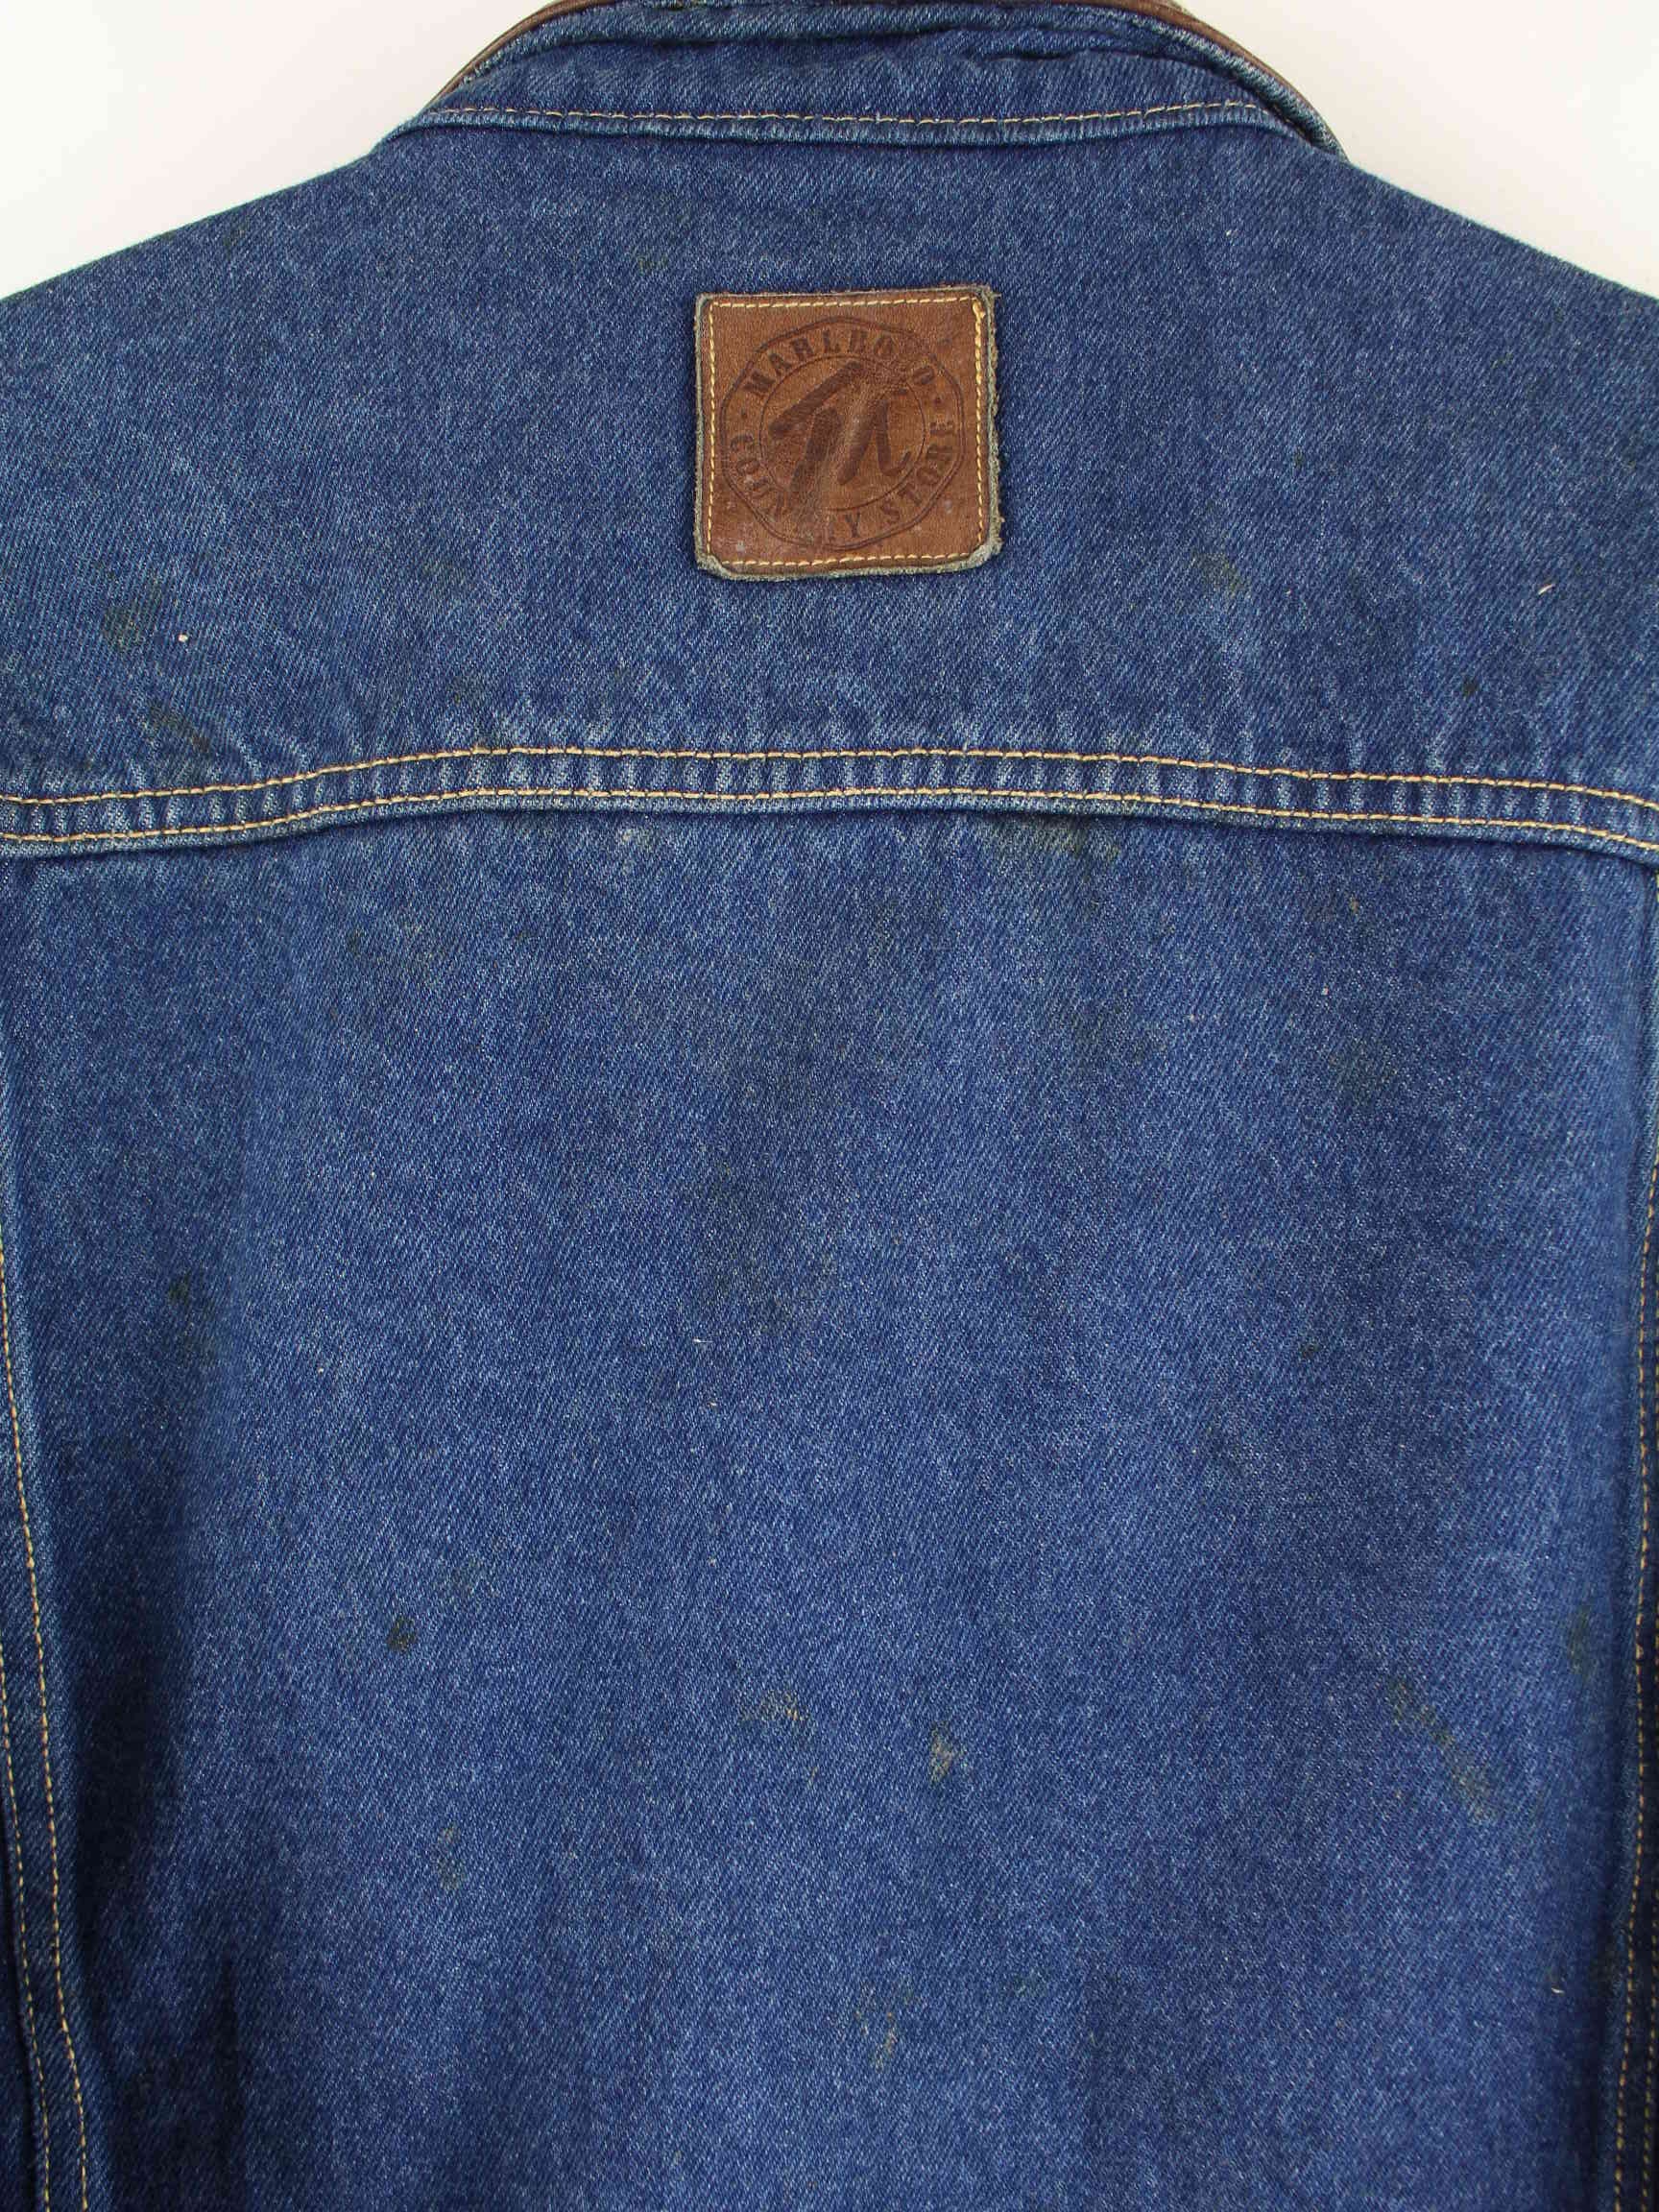 Marlboro 90s Vintage Country Store Trucker Jeans Jacke Blau M (detail image 11)